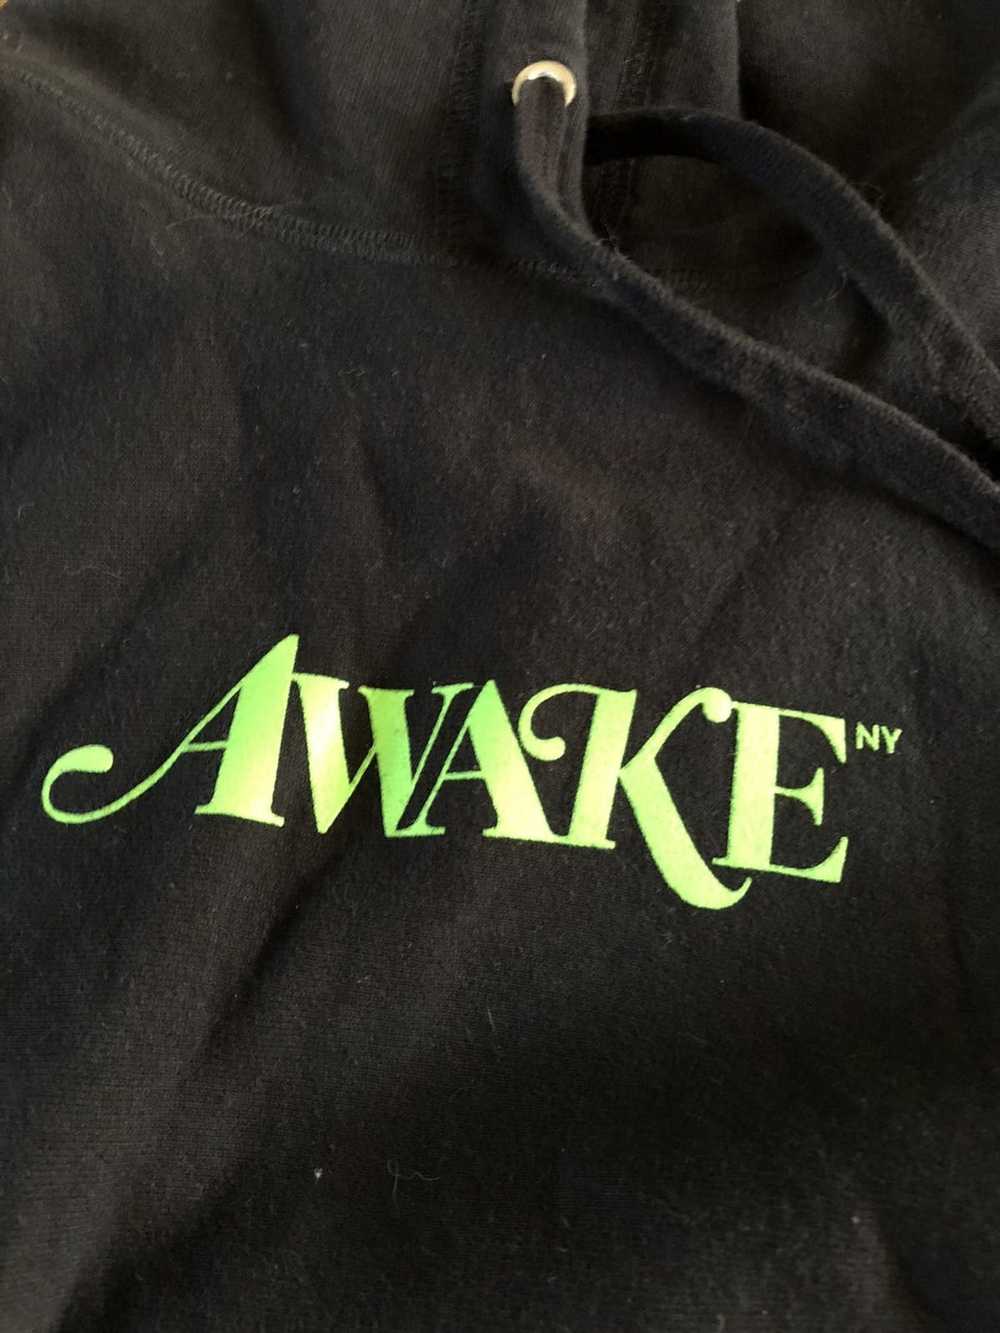 Awake Awake x dover street market LA 2018 - image 5